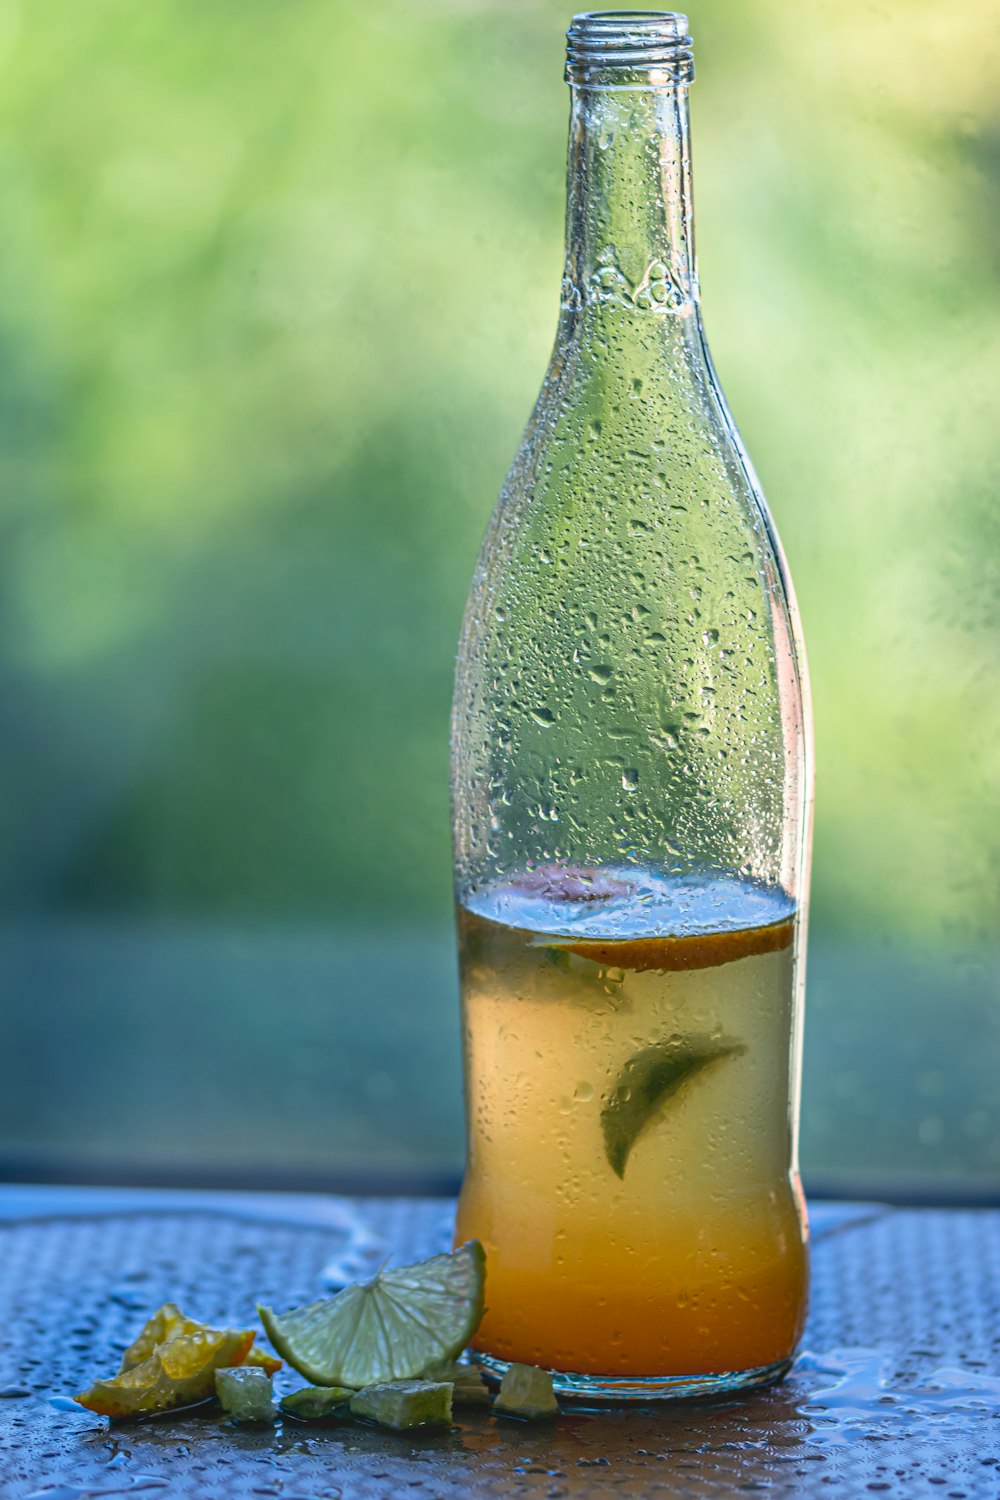 Botella de vidrio transparente con líquido amarillo